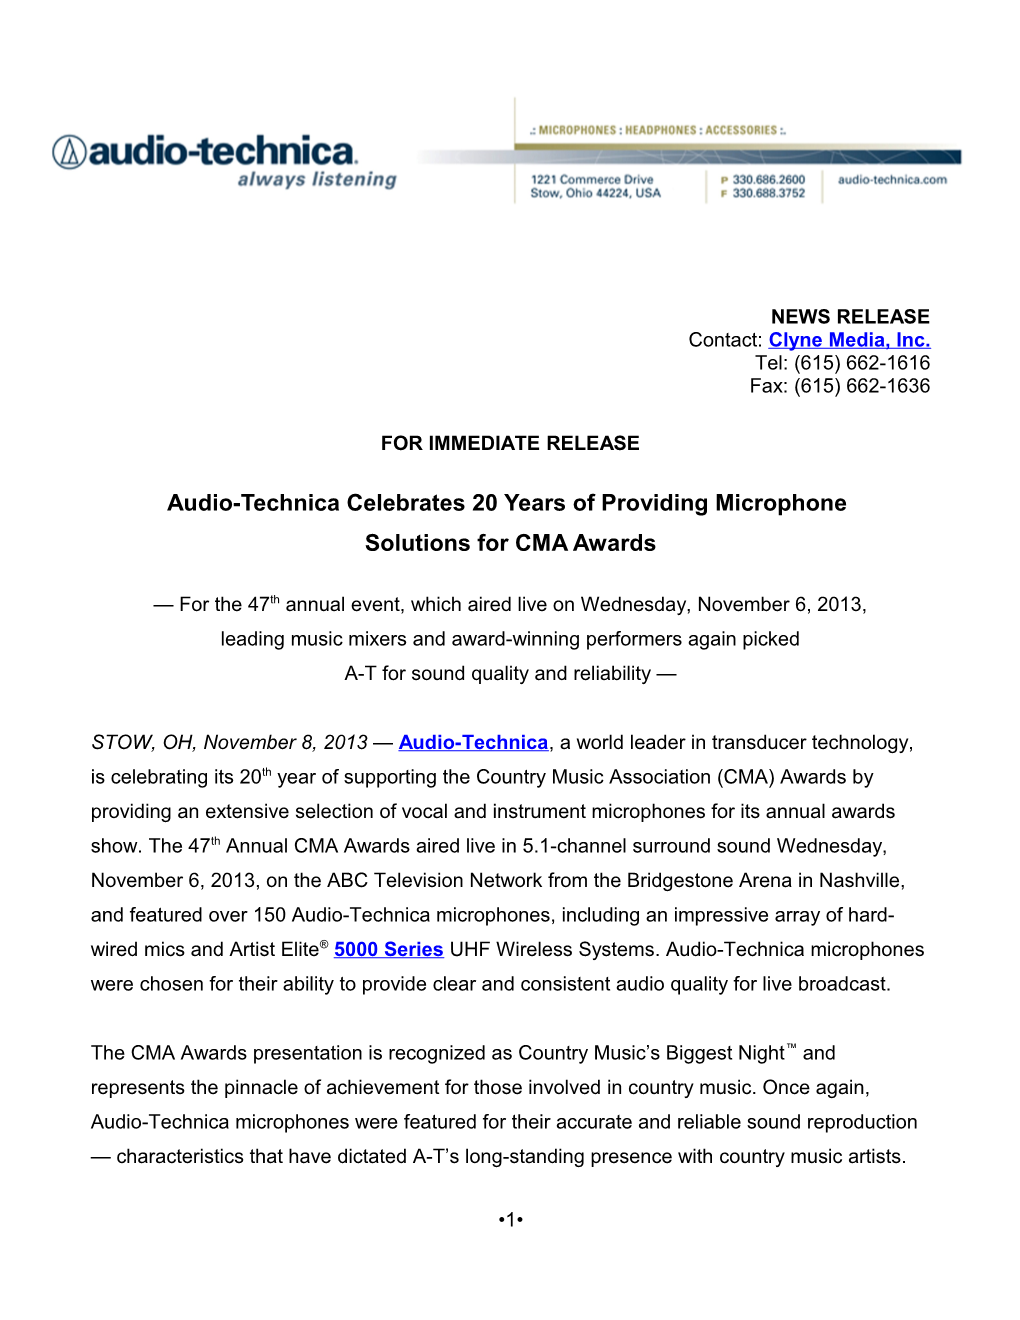 Audio-Technica Celebrates 20 Years of Providing Microphone